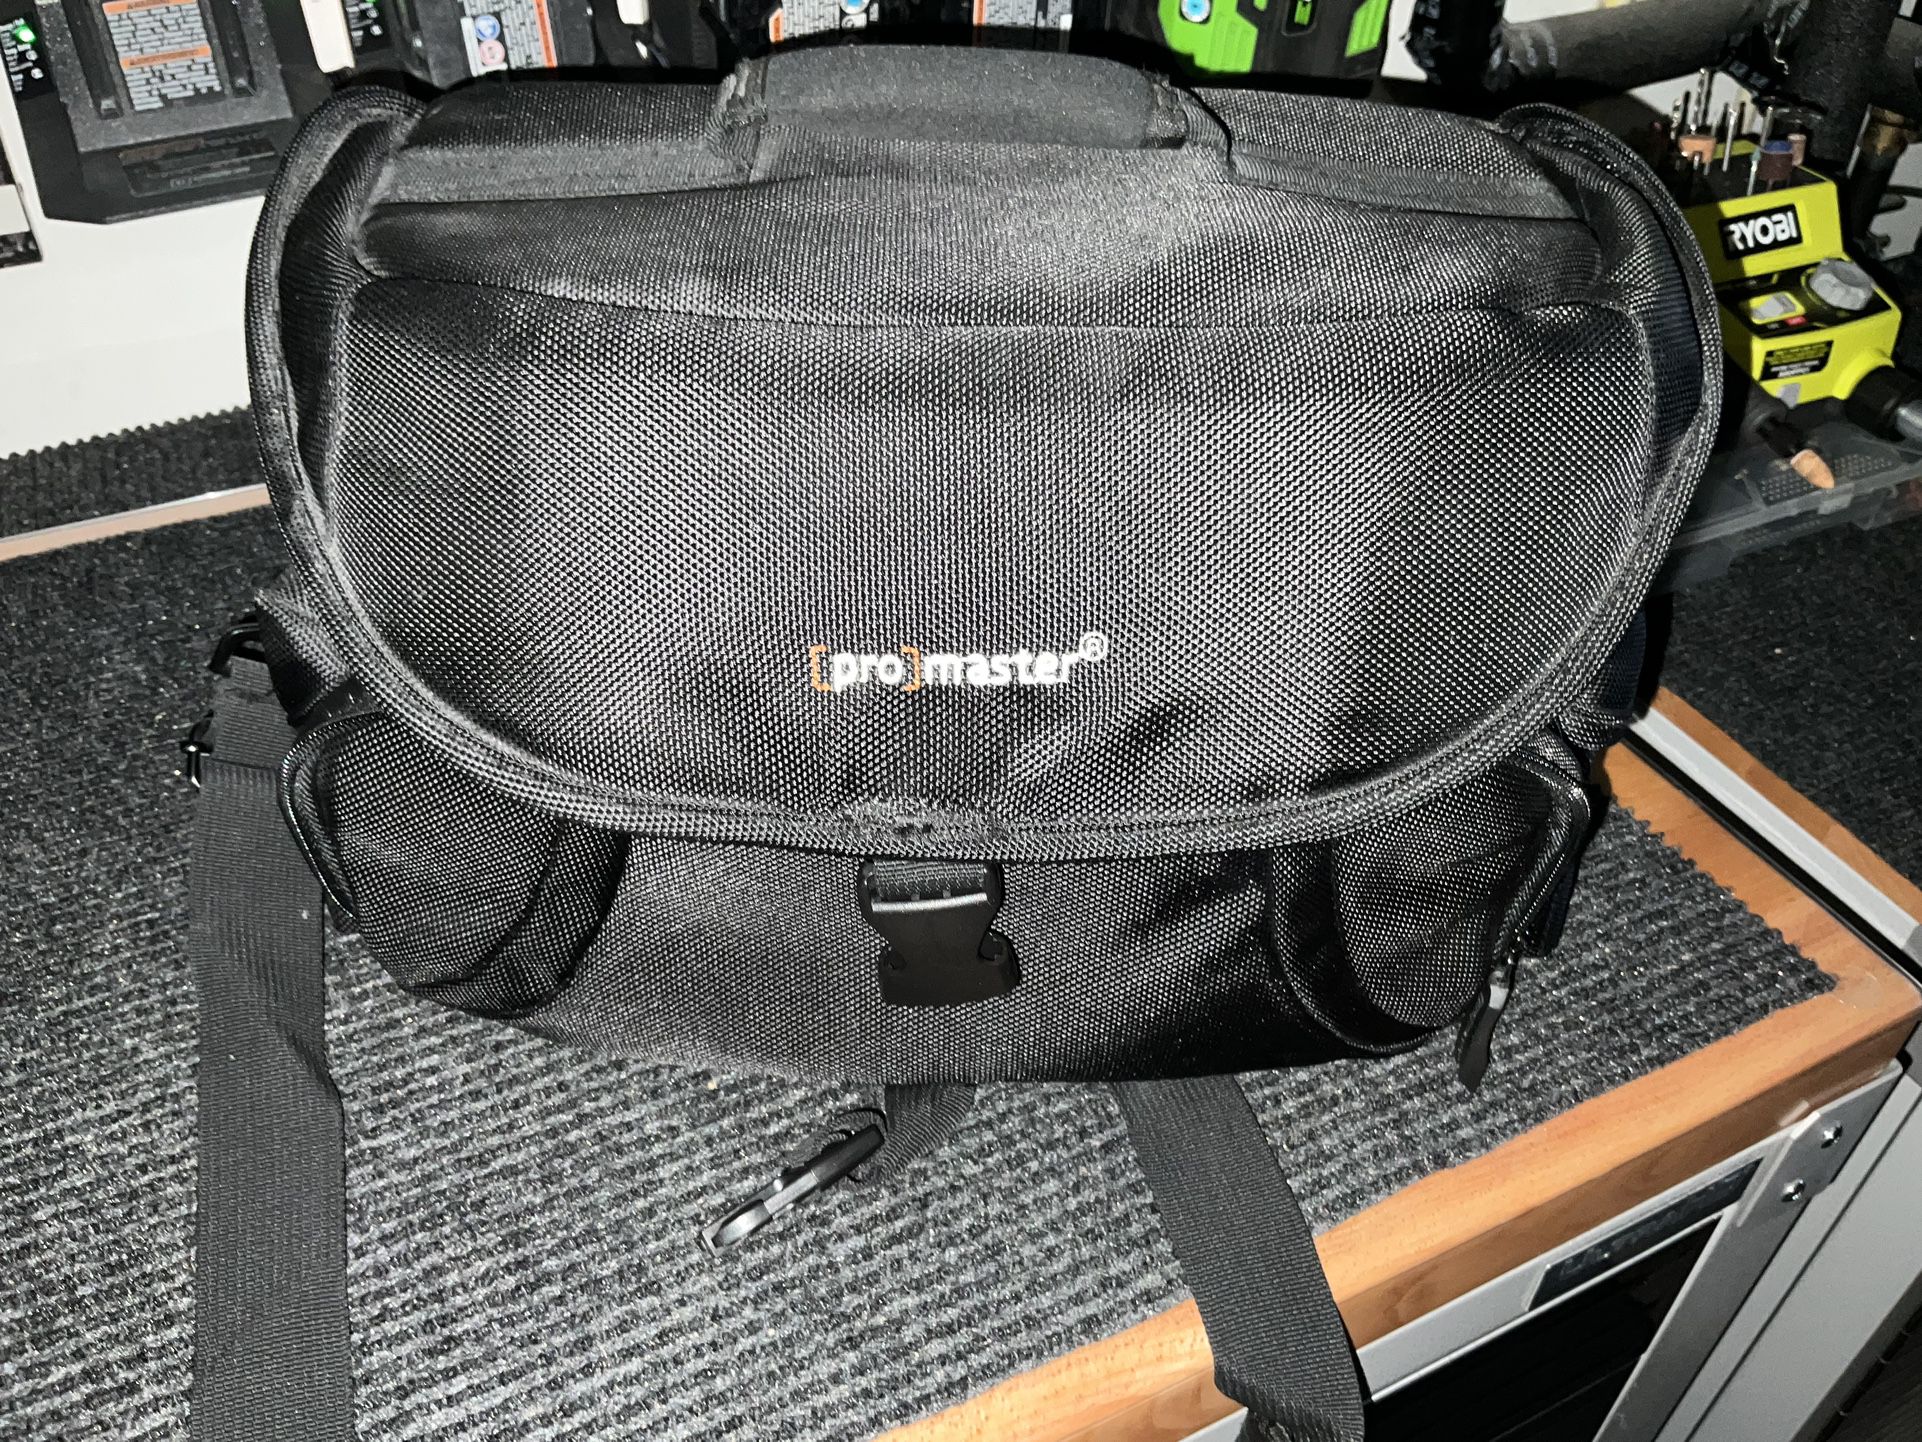 Promaster Camera Bag